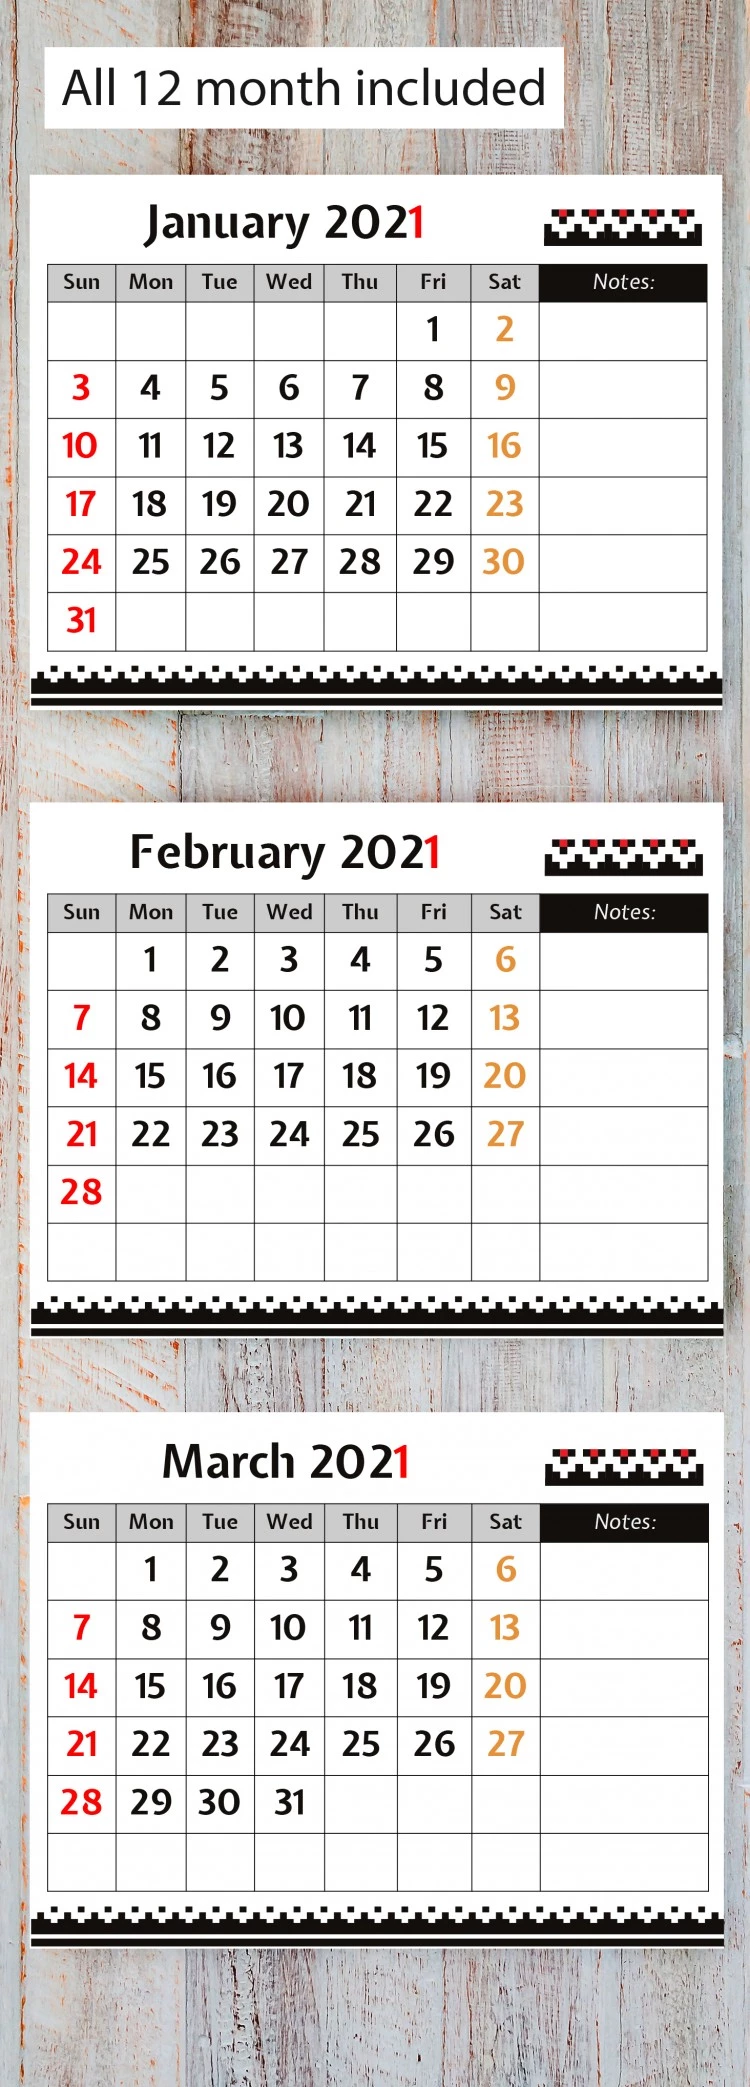 Calendario mensual especial 2021 - free Google Docs Template - 10061806